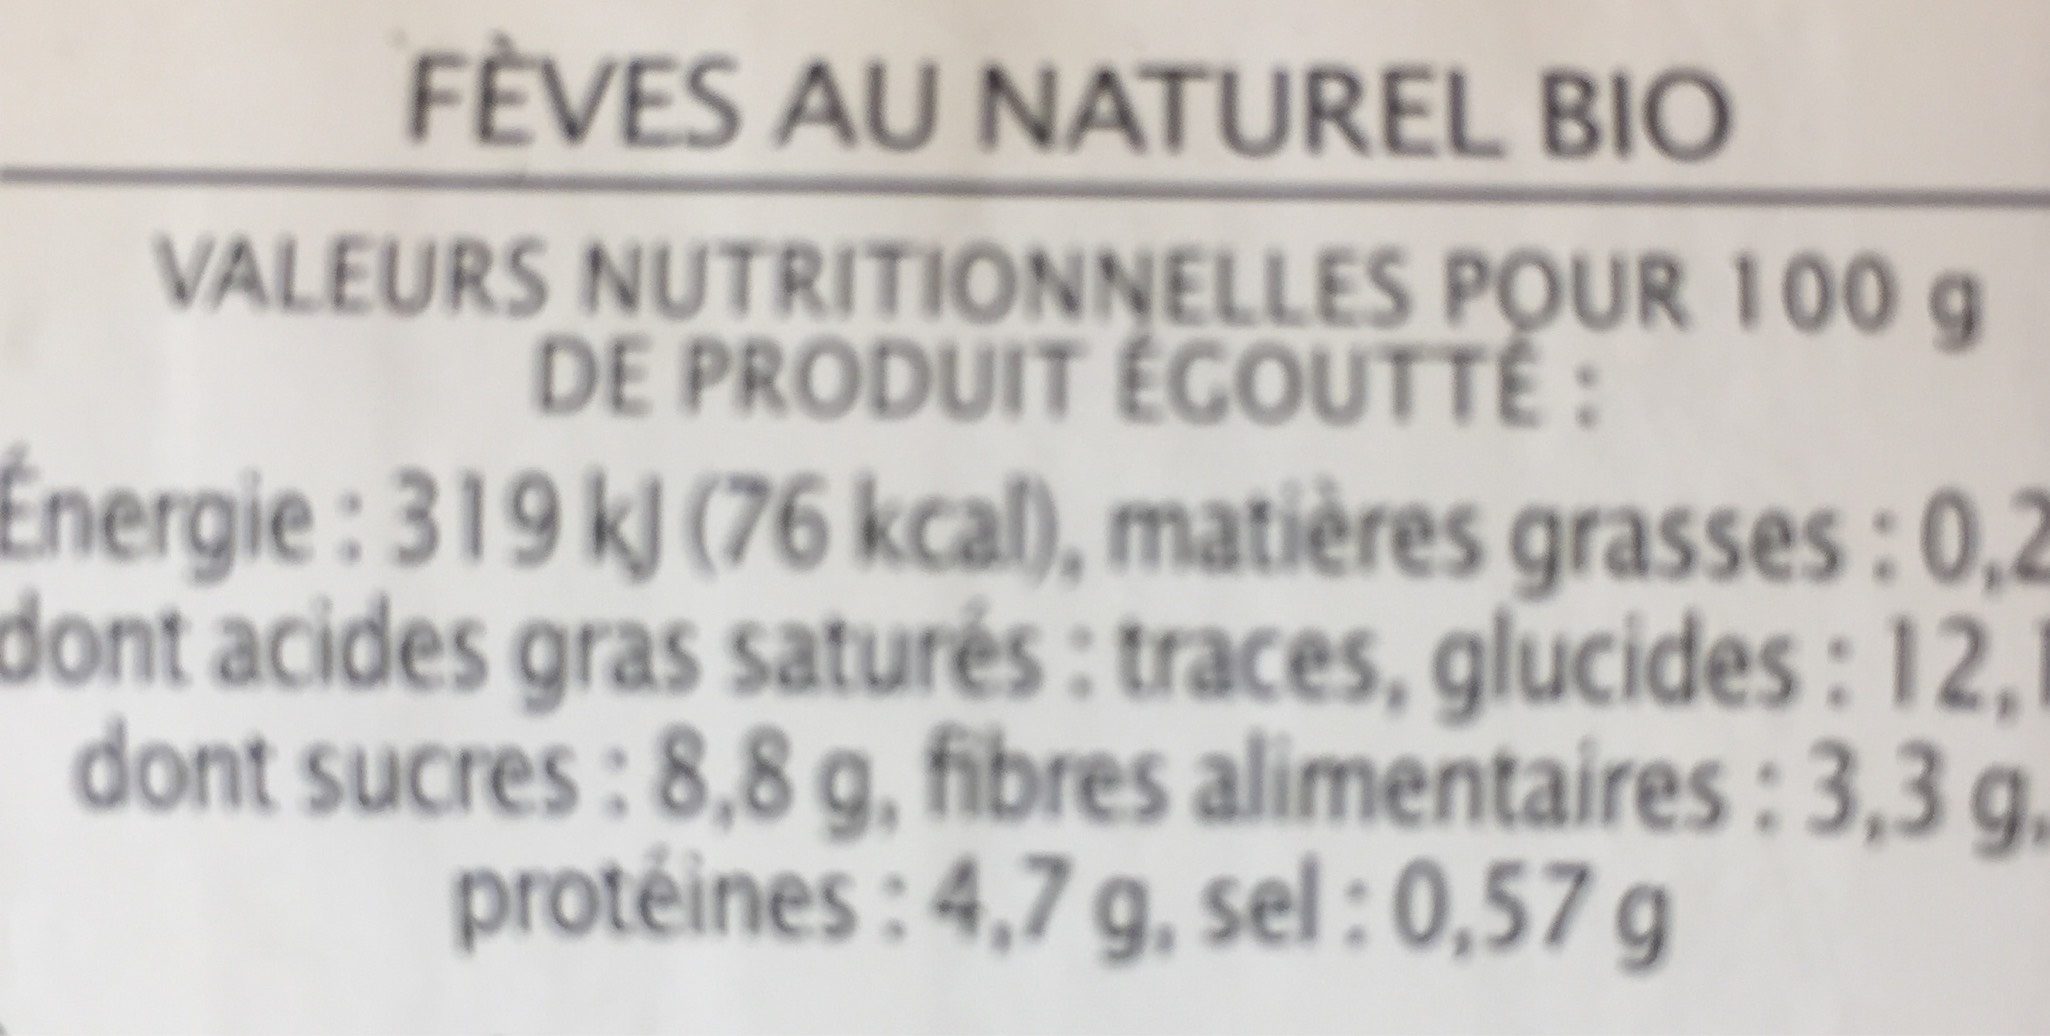 Feves au naturel - Información nutricional - fr